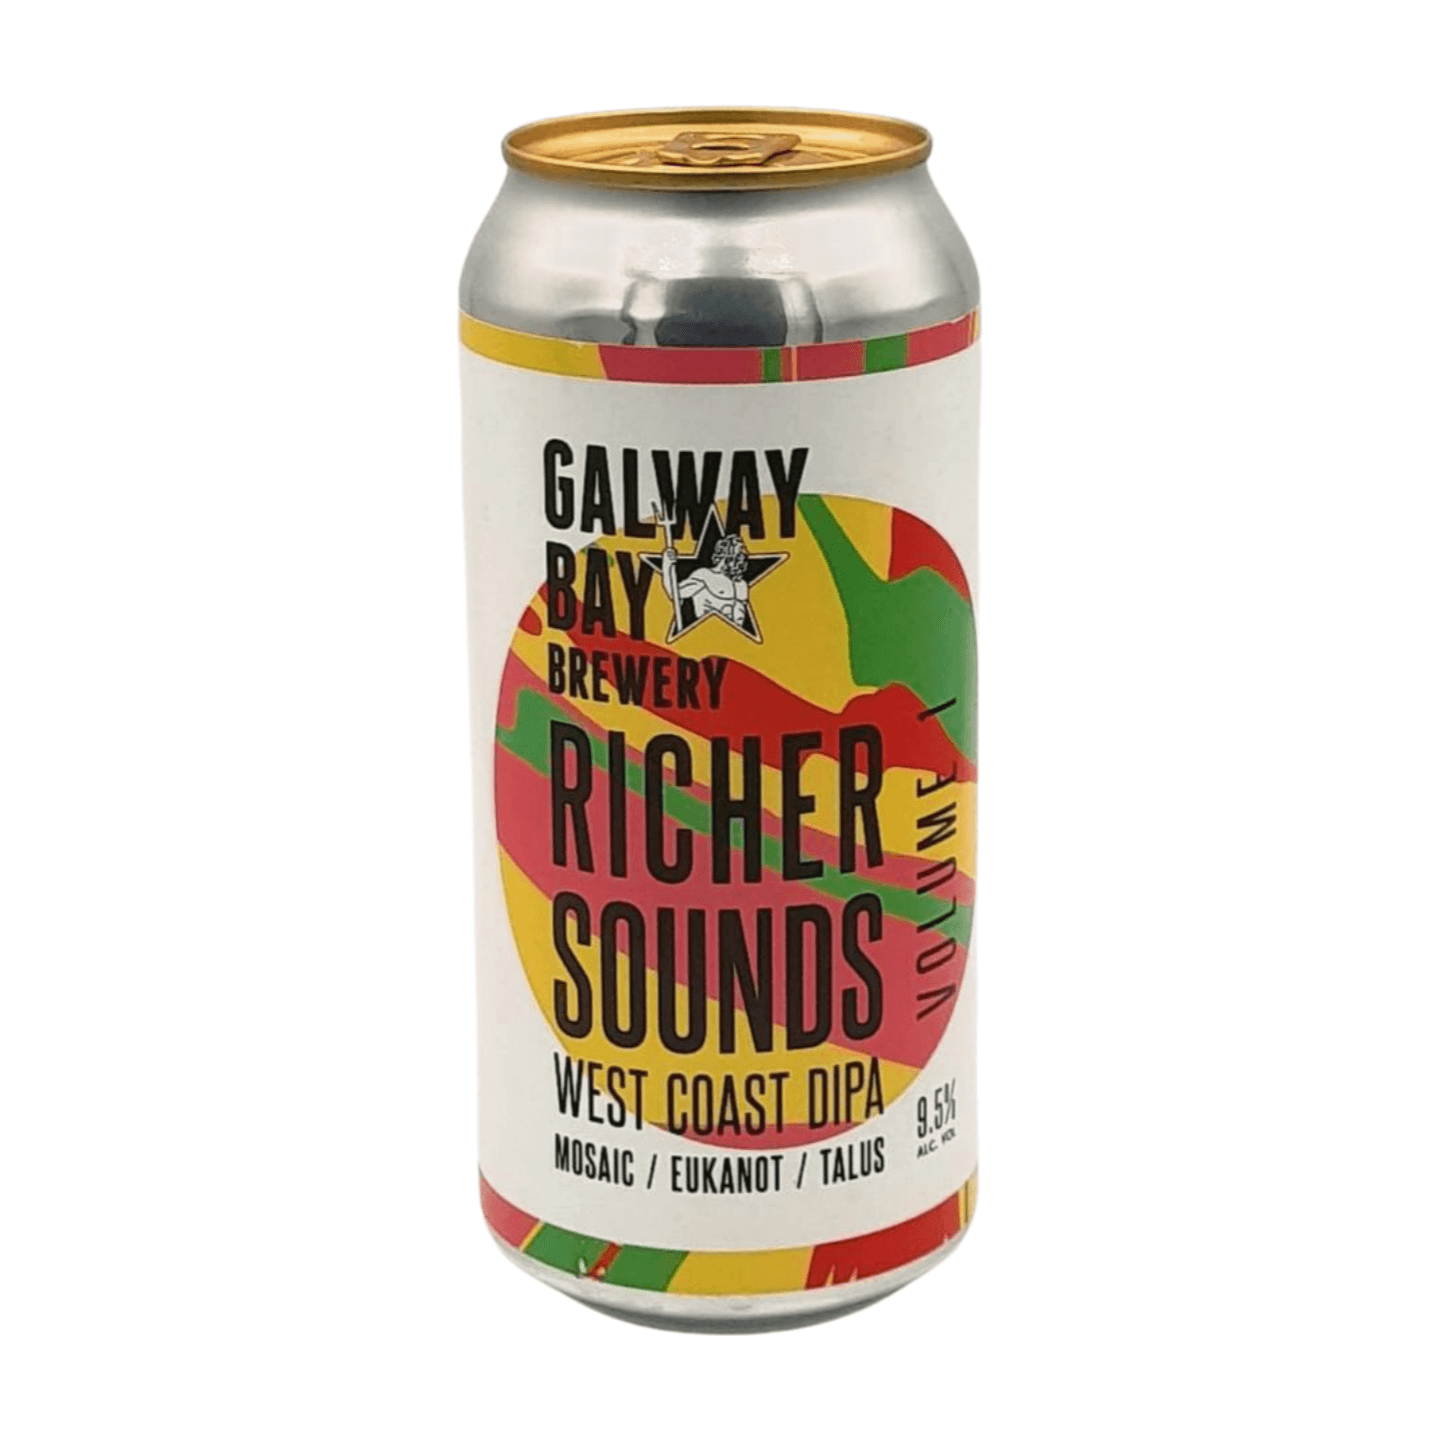 Galway Bay Brewery Richer Sounds | West Coast DIPA Webshop Online Verdins Bierwinkel Rotterdam